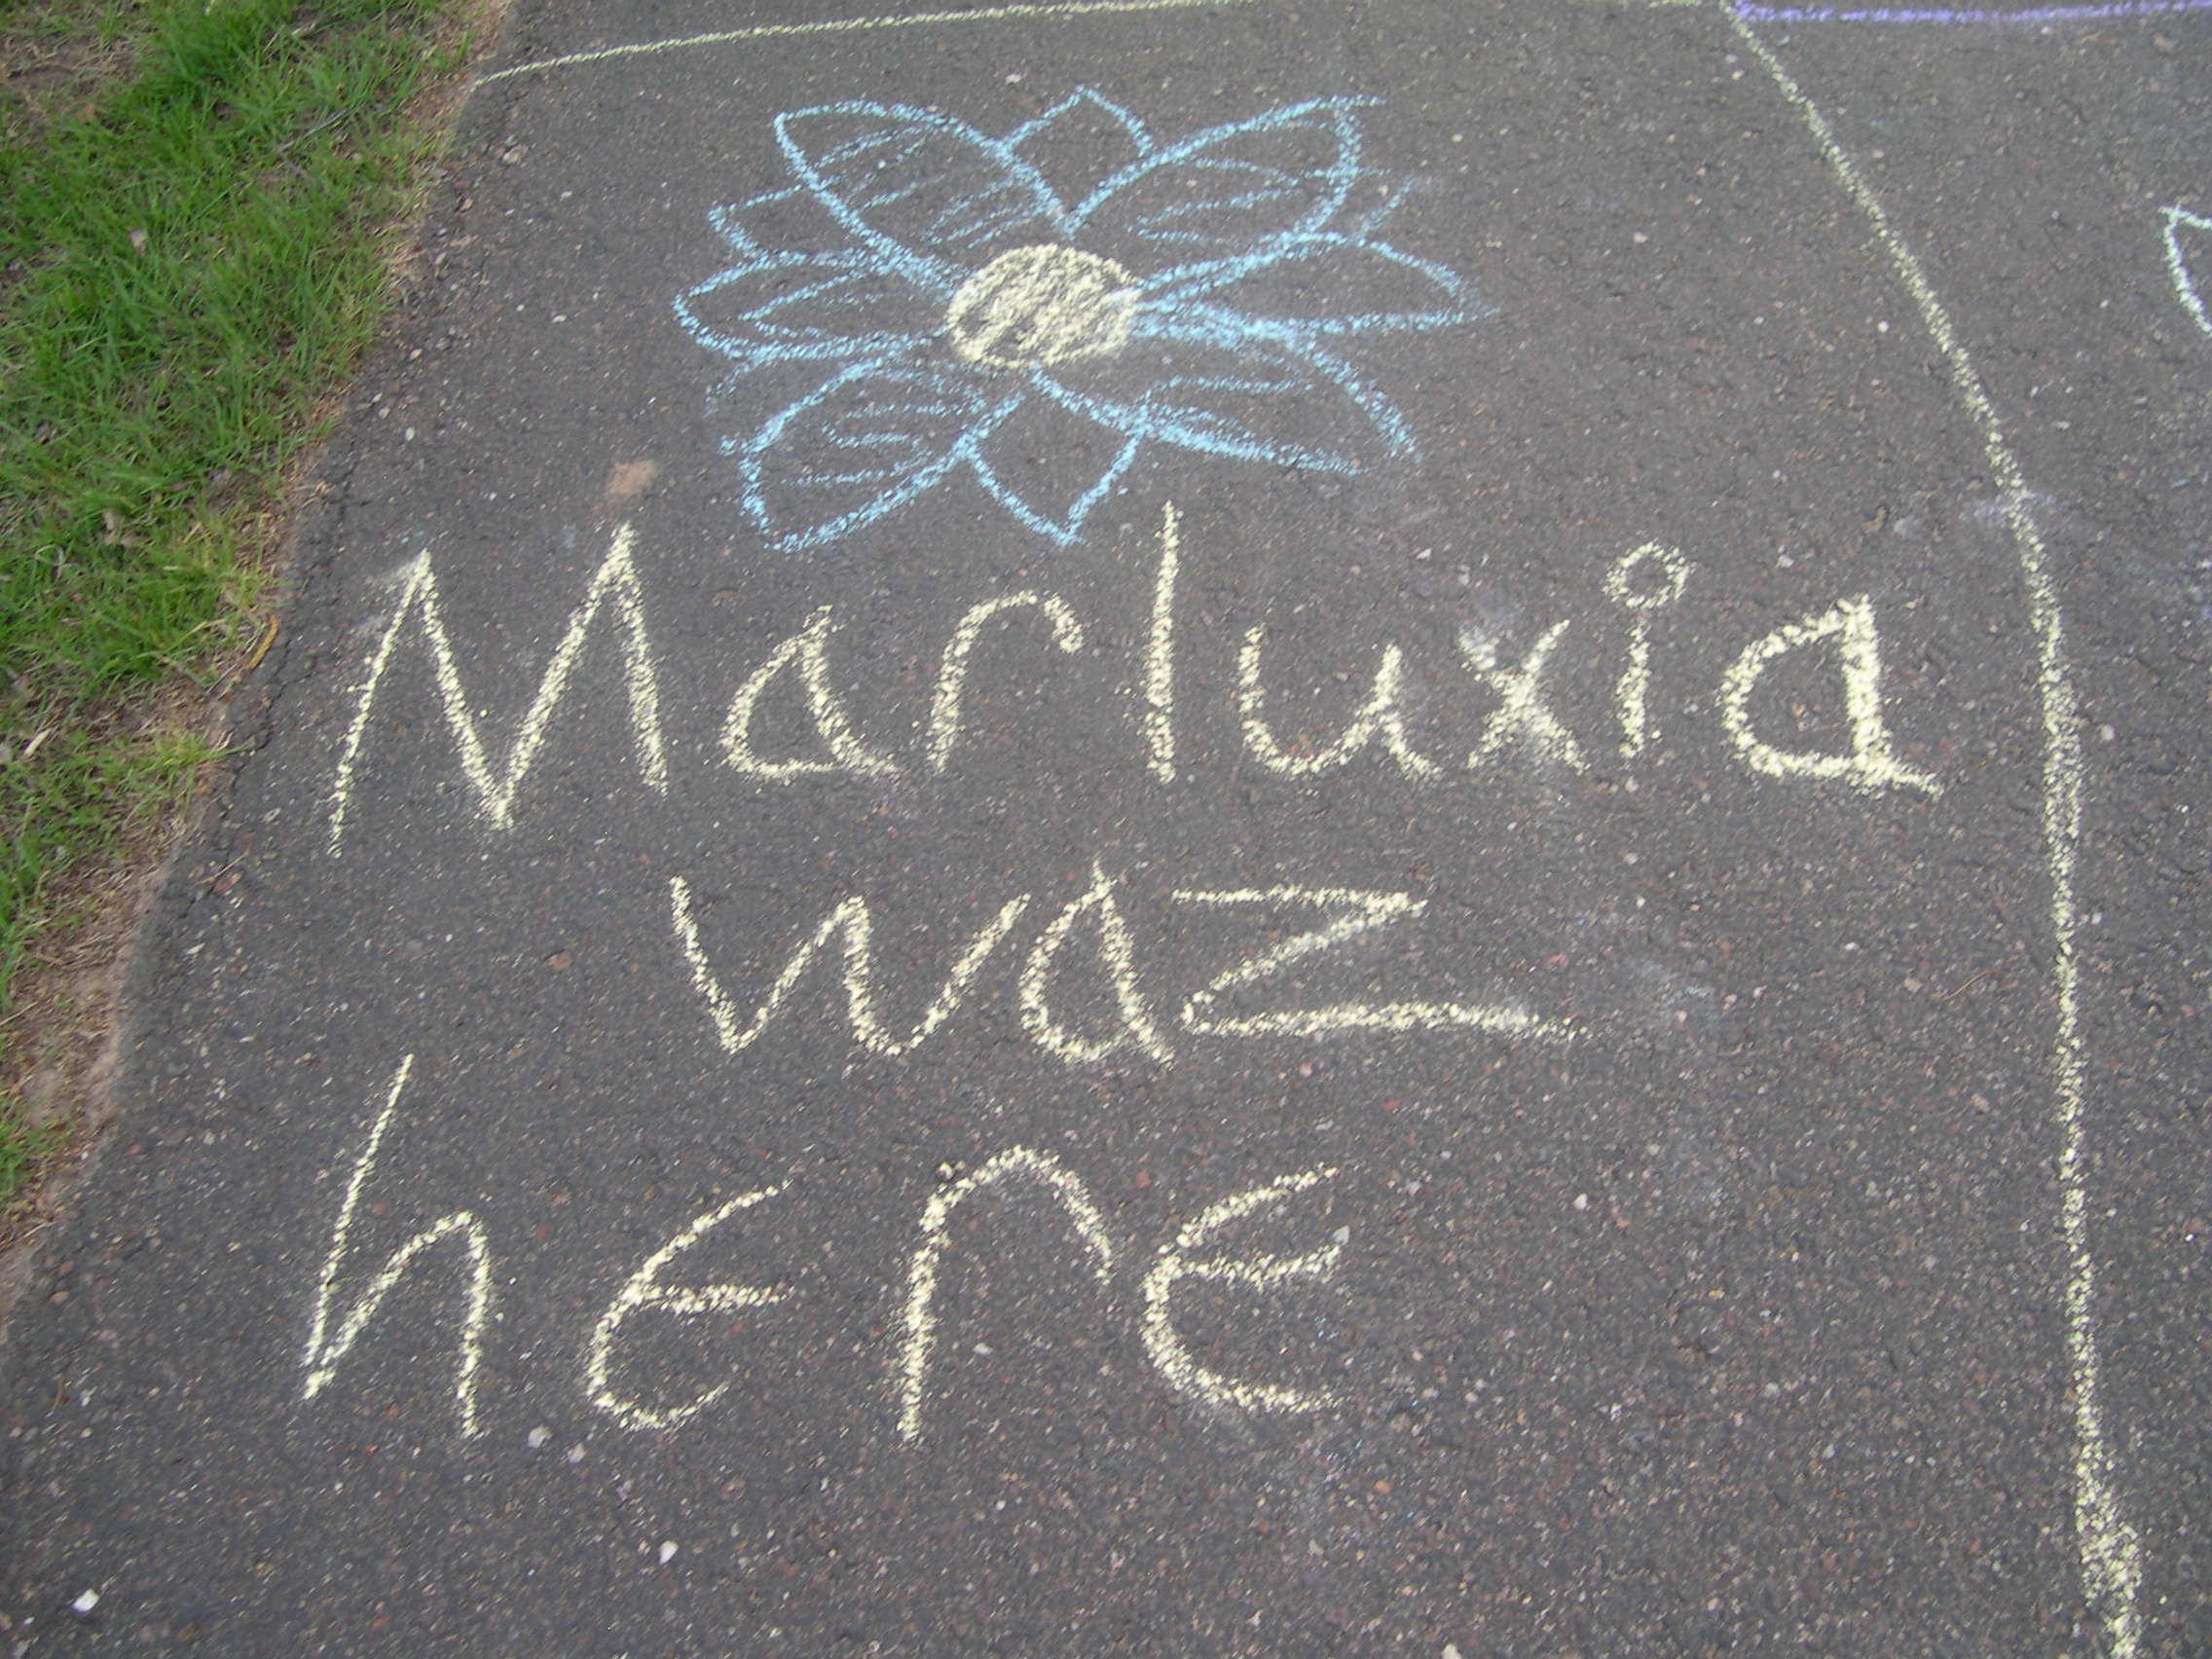 Sidewalk chalk issue one: Marluxia by soraxrikulover